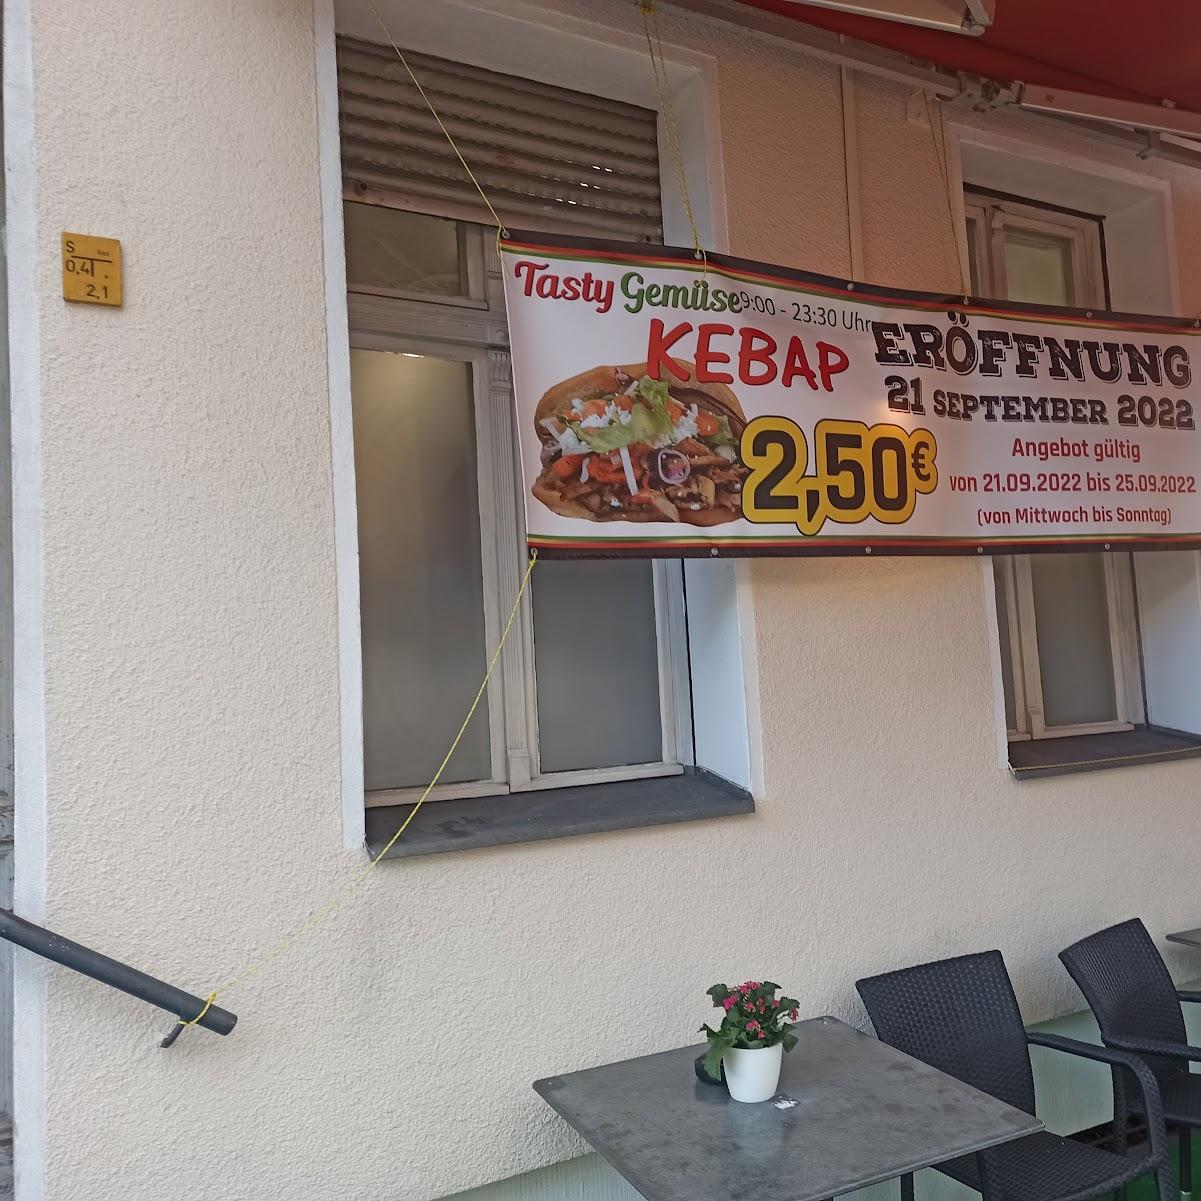 Restaurant "TASTY-GEMÜSE Kebab Berlin" in Berlin